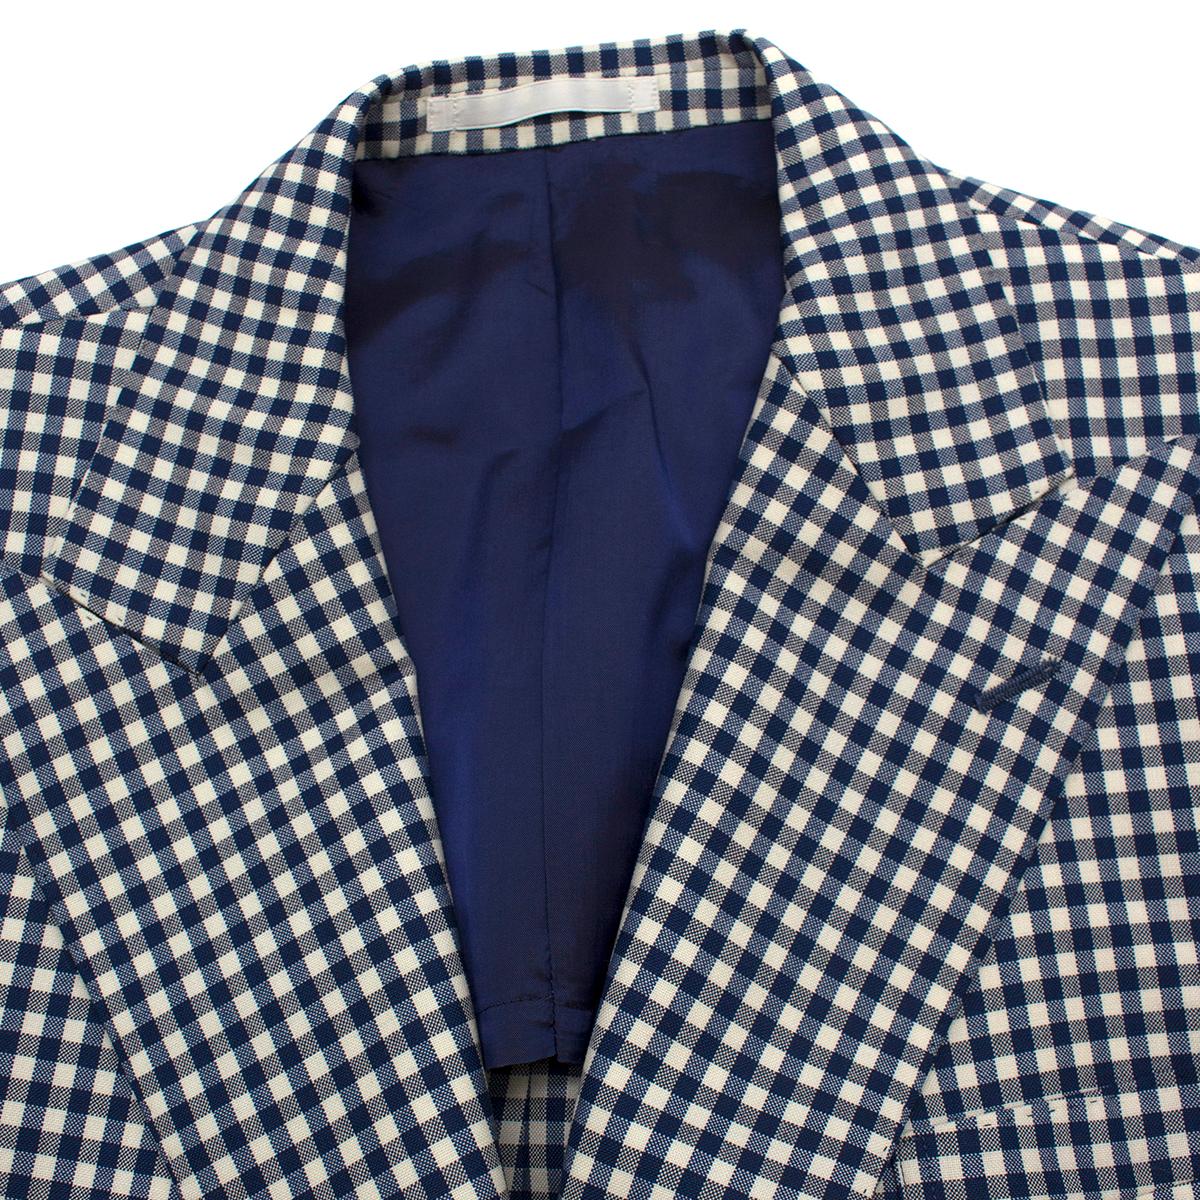 Gray Savile Clifford Bespoke Checkered Blazer Jacket estimated SIZE L For Sale